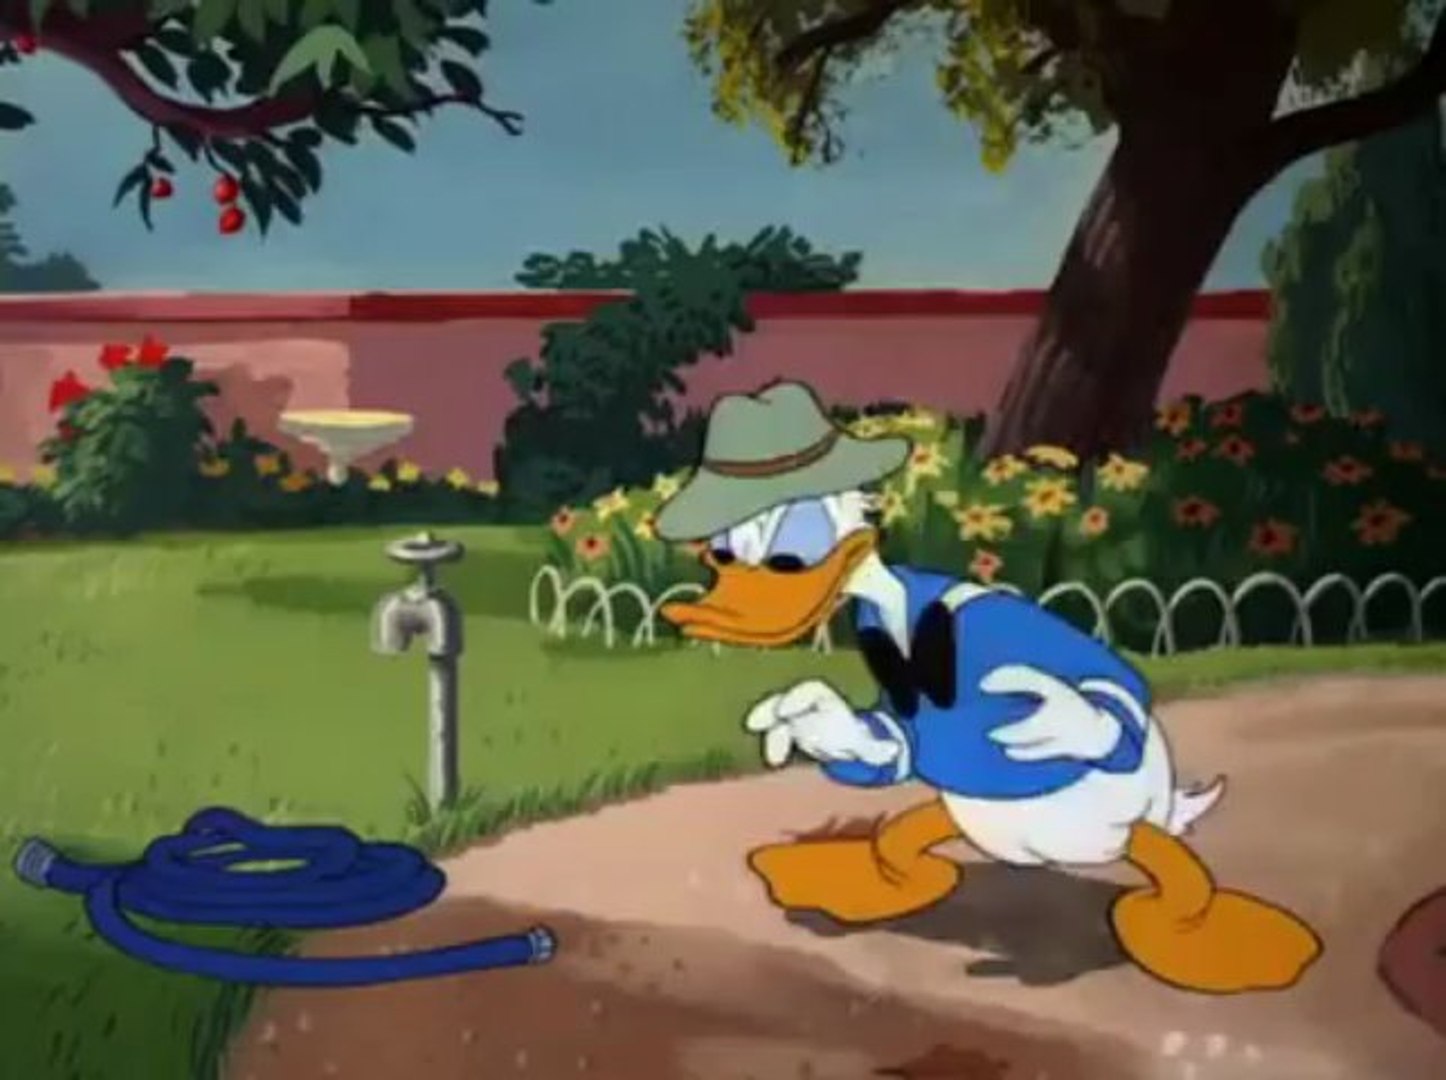 Donald Duck - The Greener Yard - Dailymotion Video